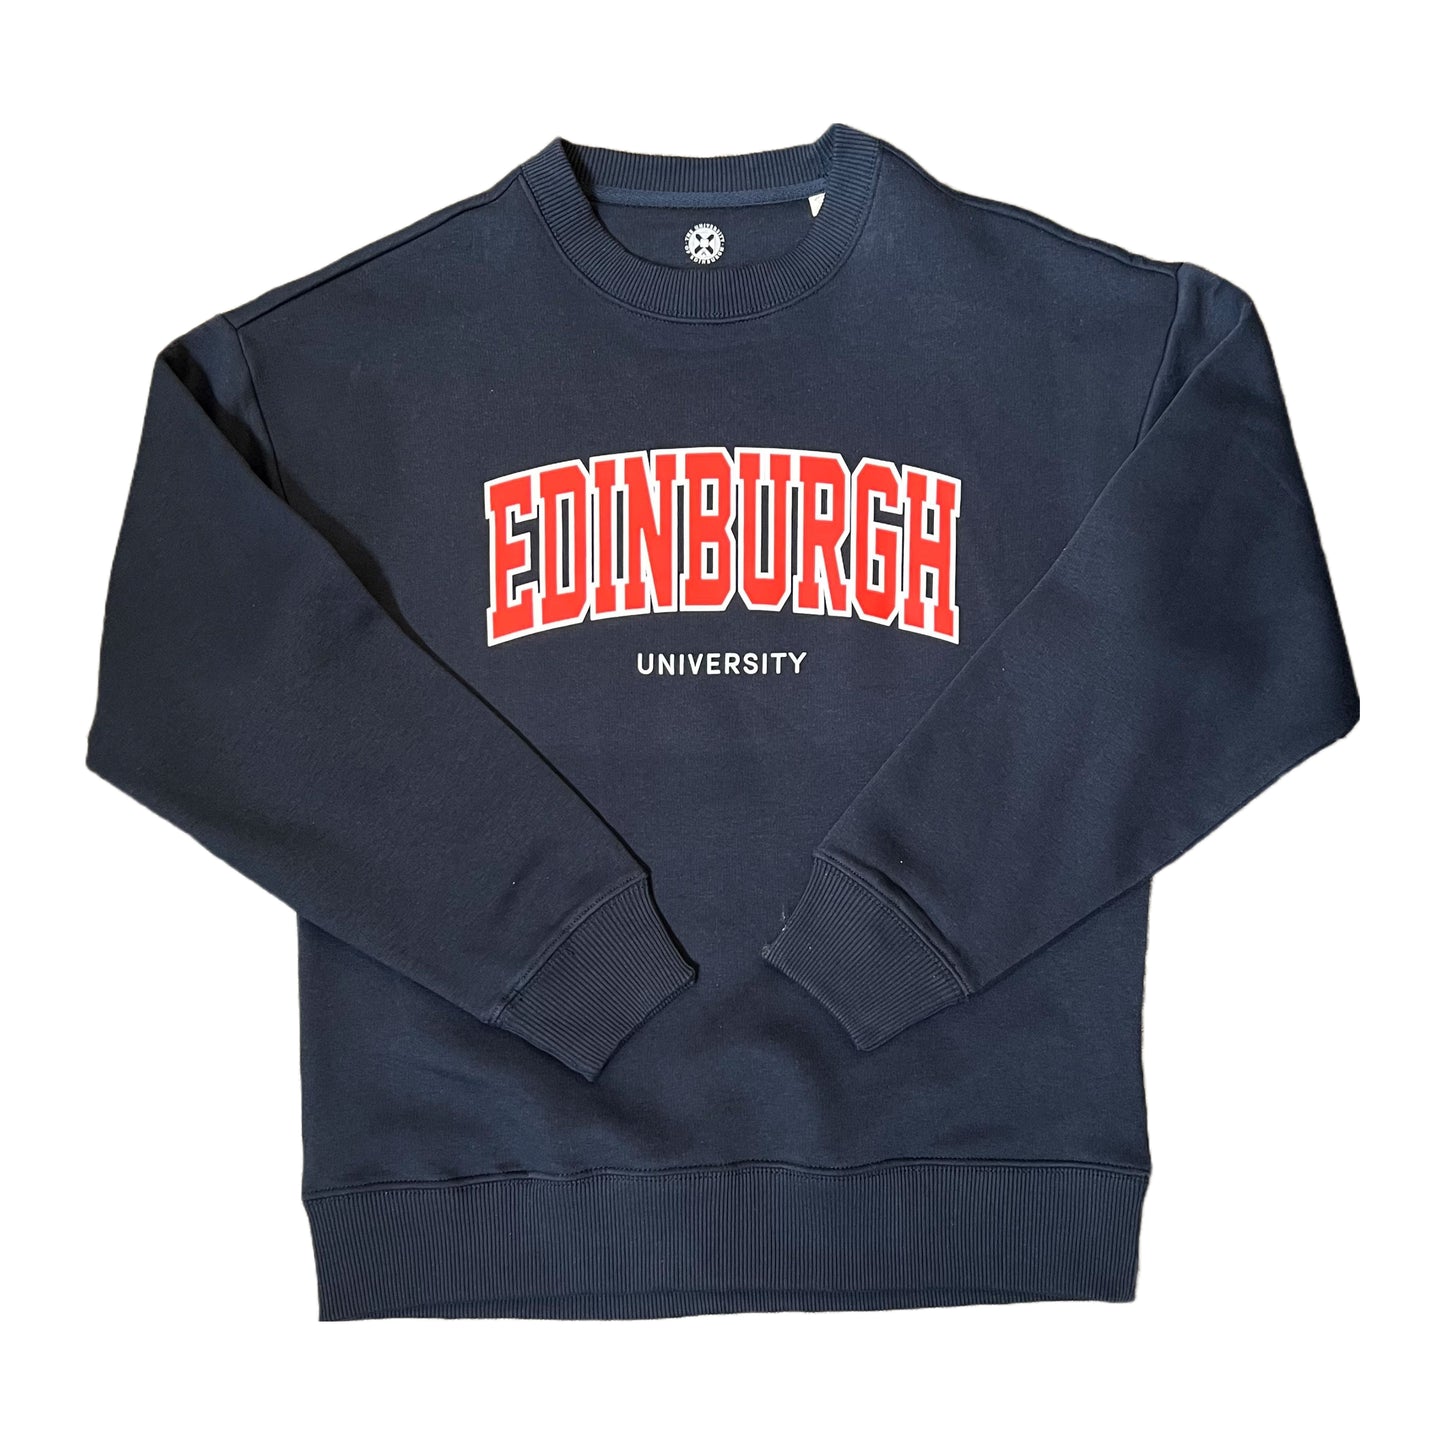 Navy sweatshirt with 'EDINBURGH UNIVERSITY' text in red and white